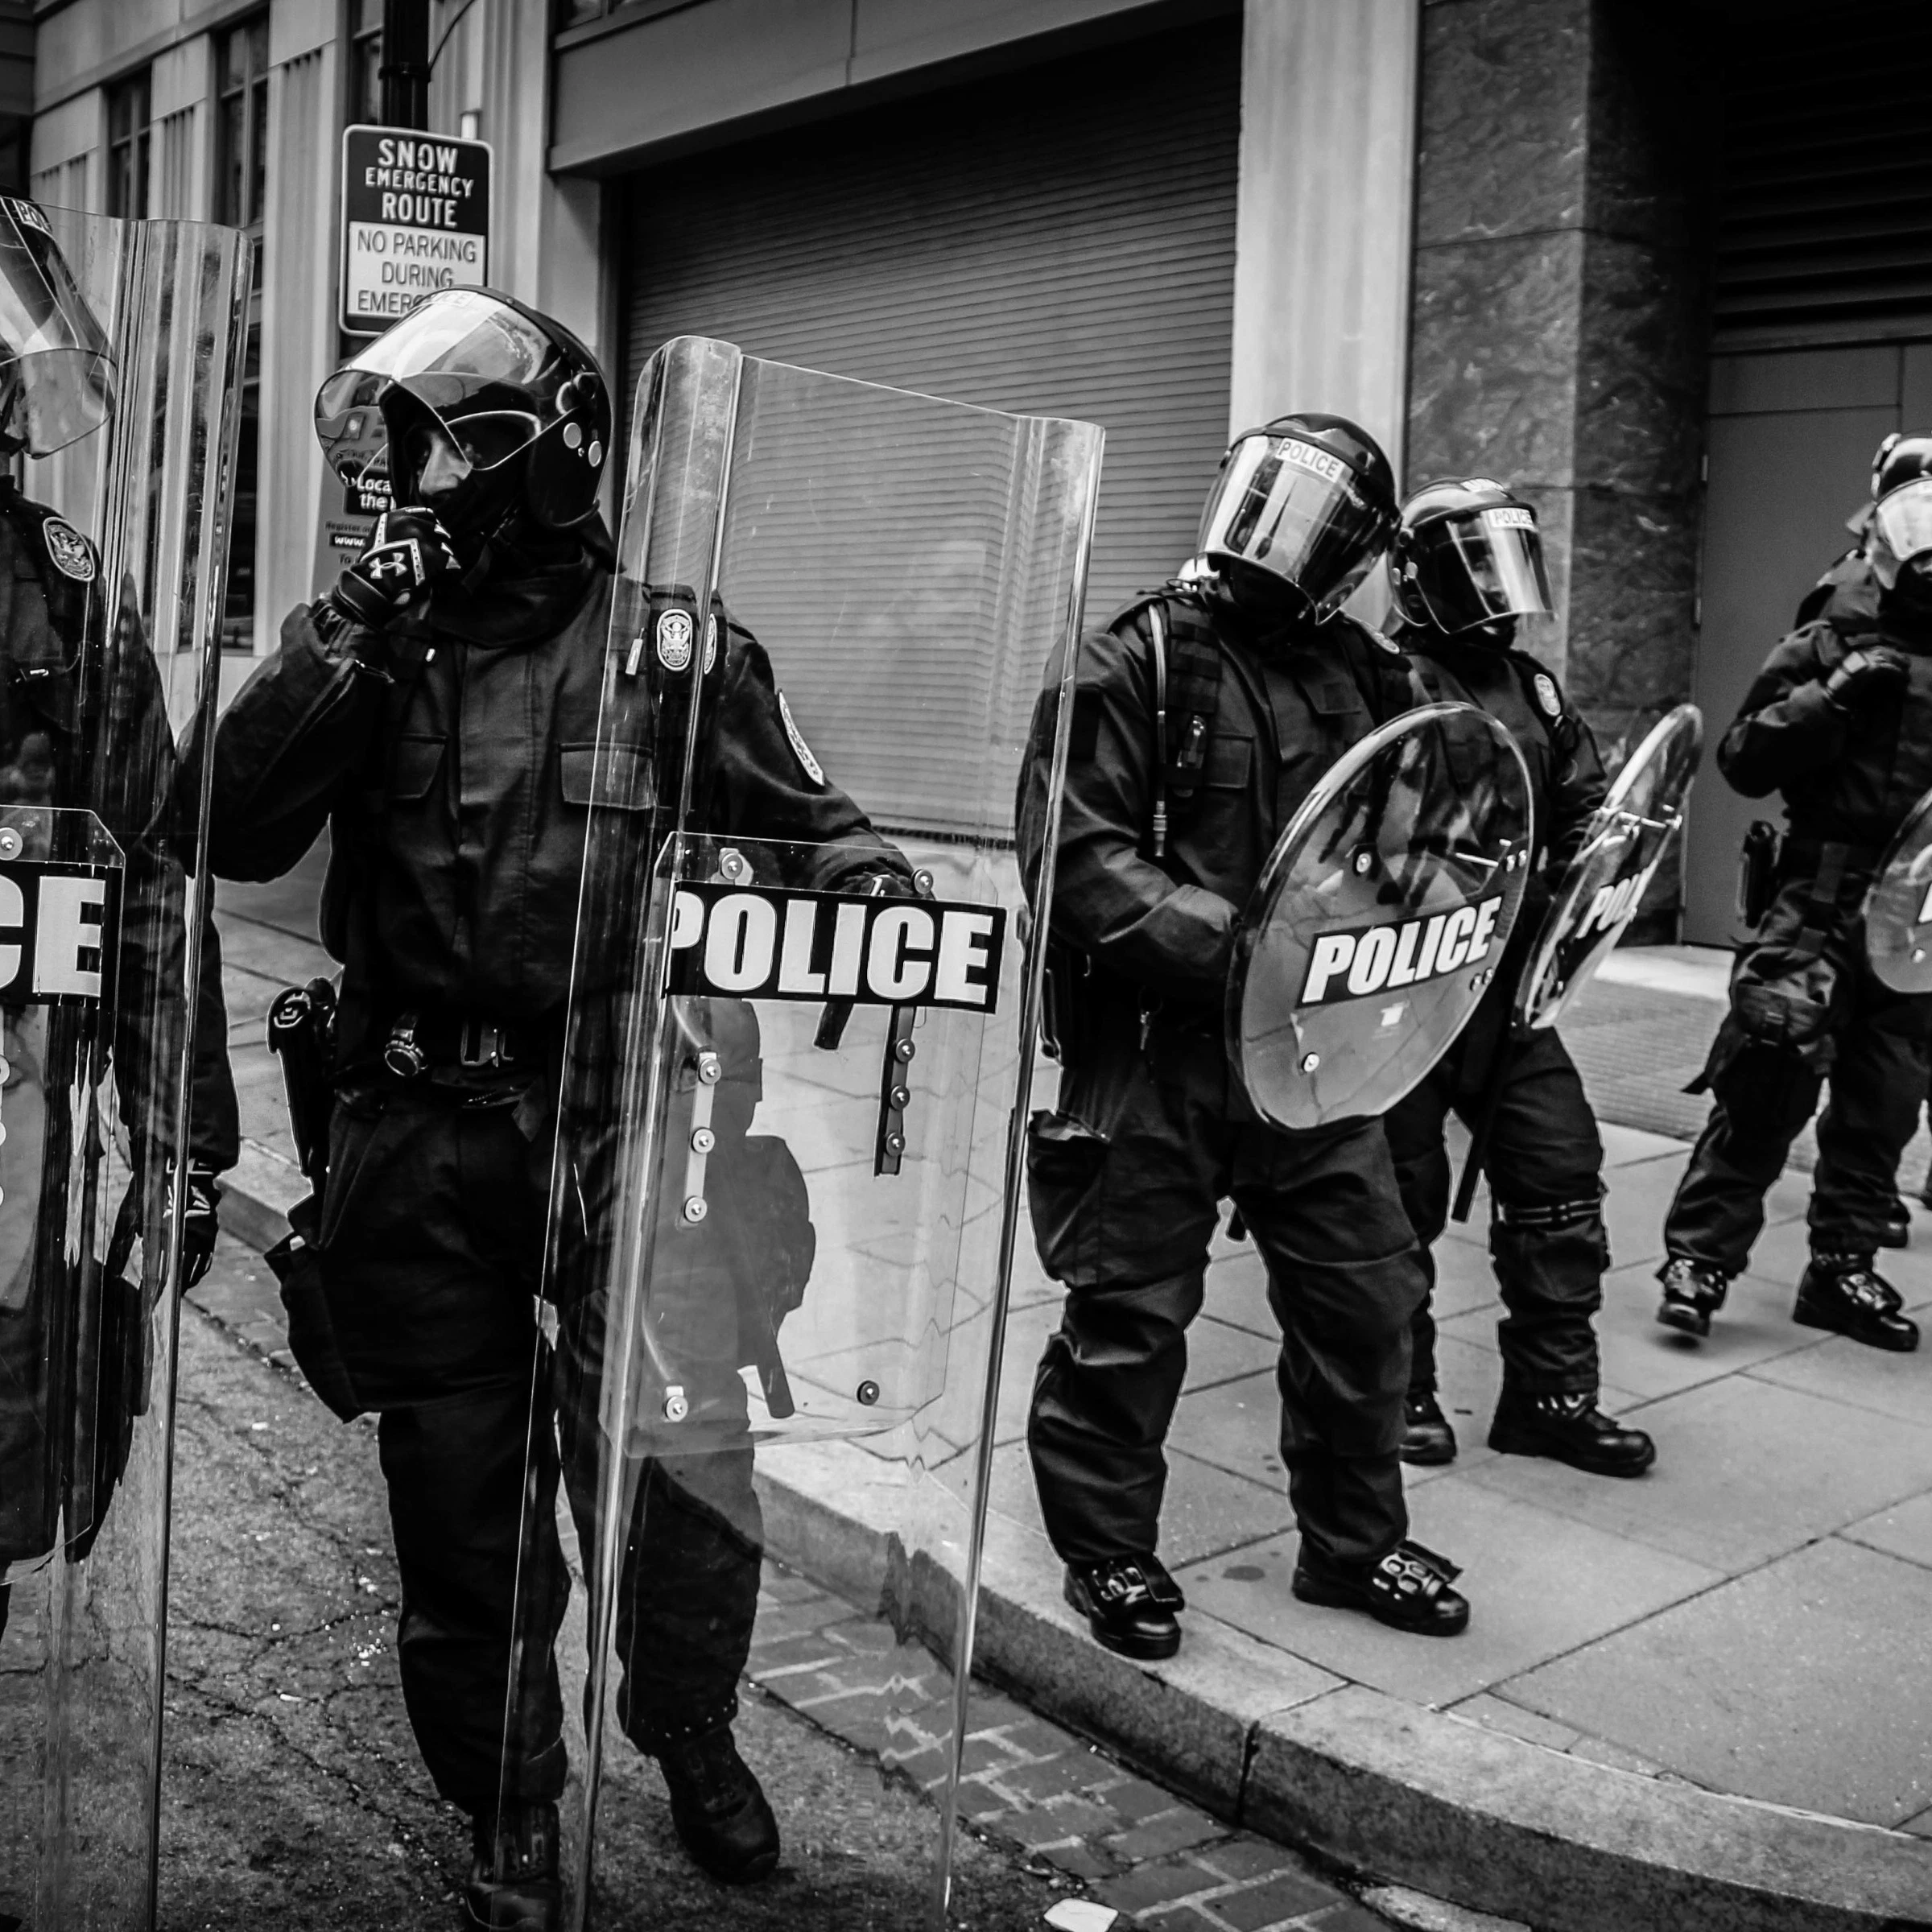 How do we increase police accountability in urban communities?